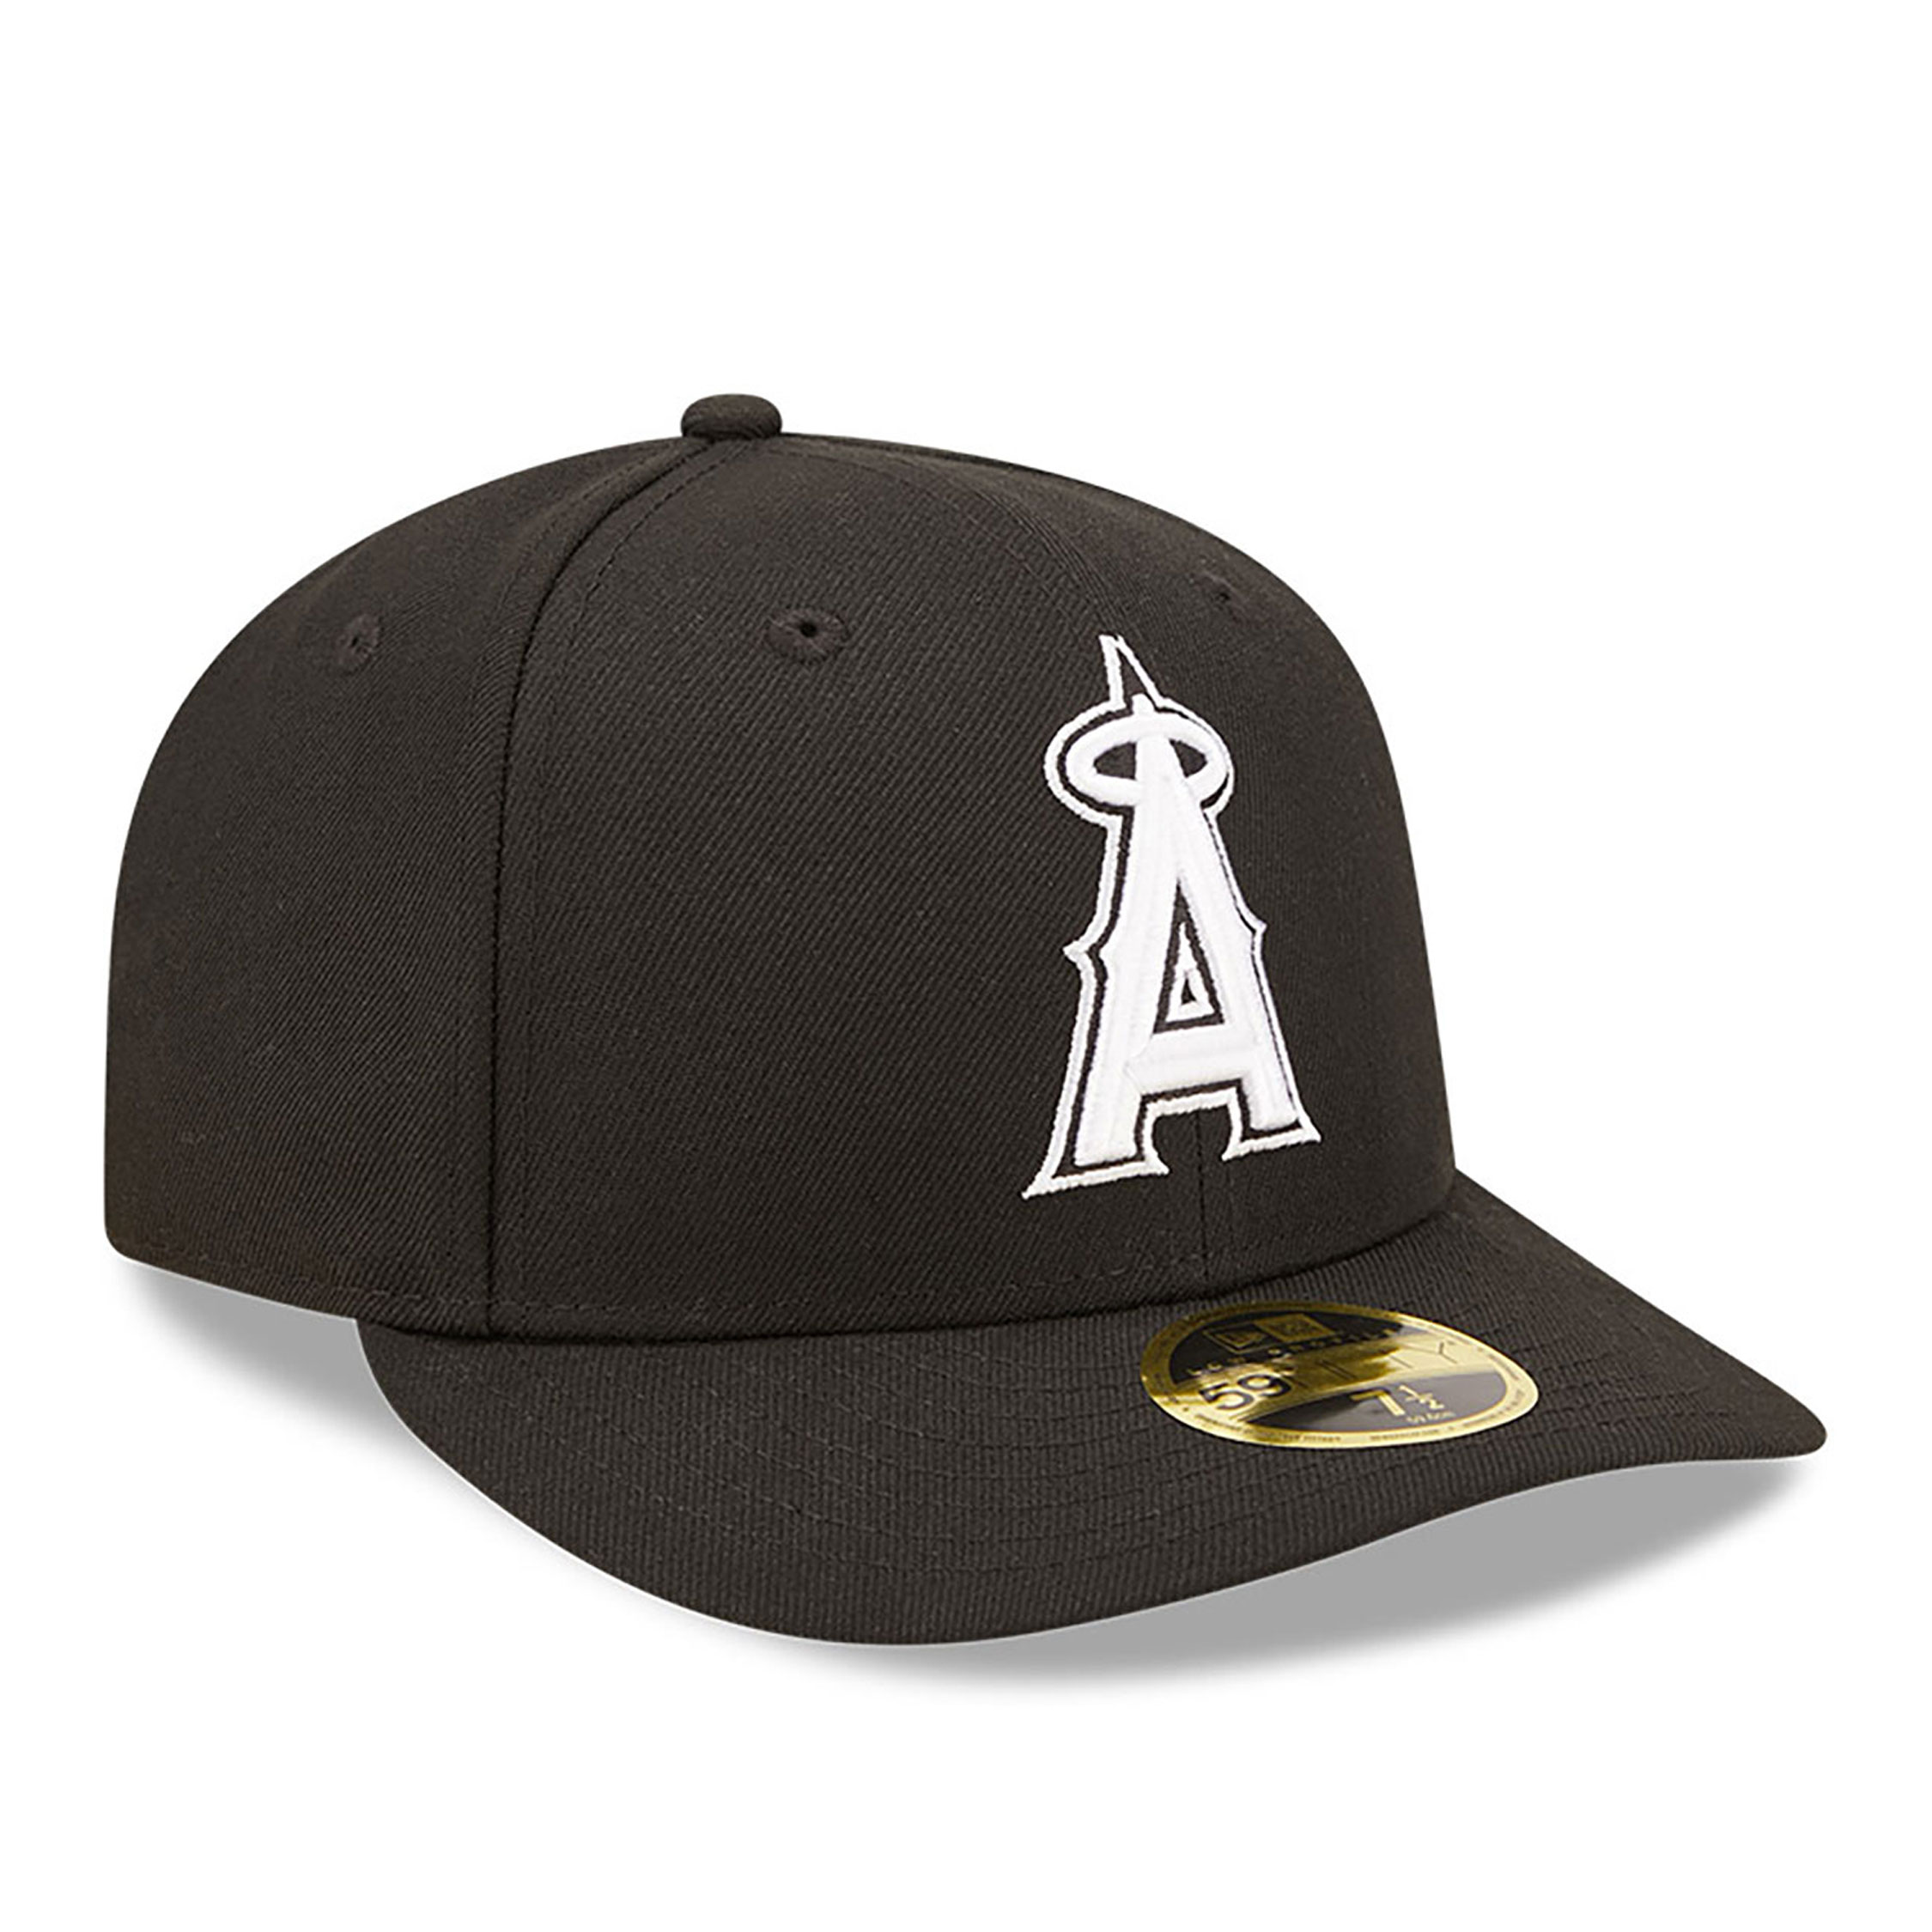 Anaheim Angels Black 59FIFTY Low Profile Cap